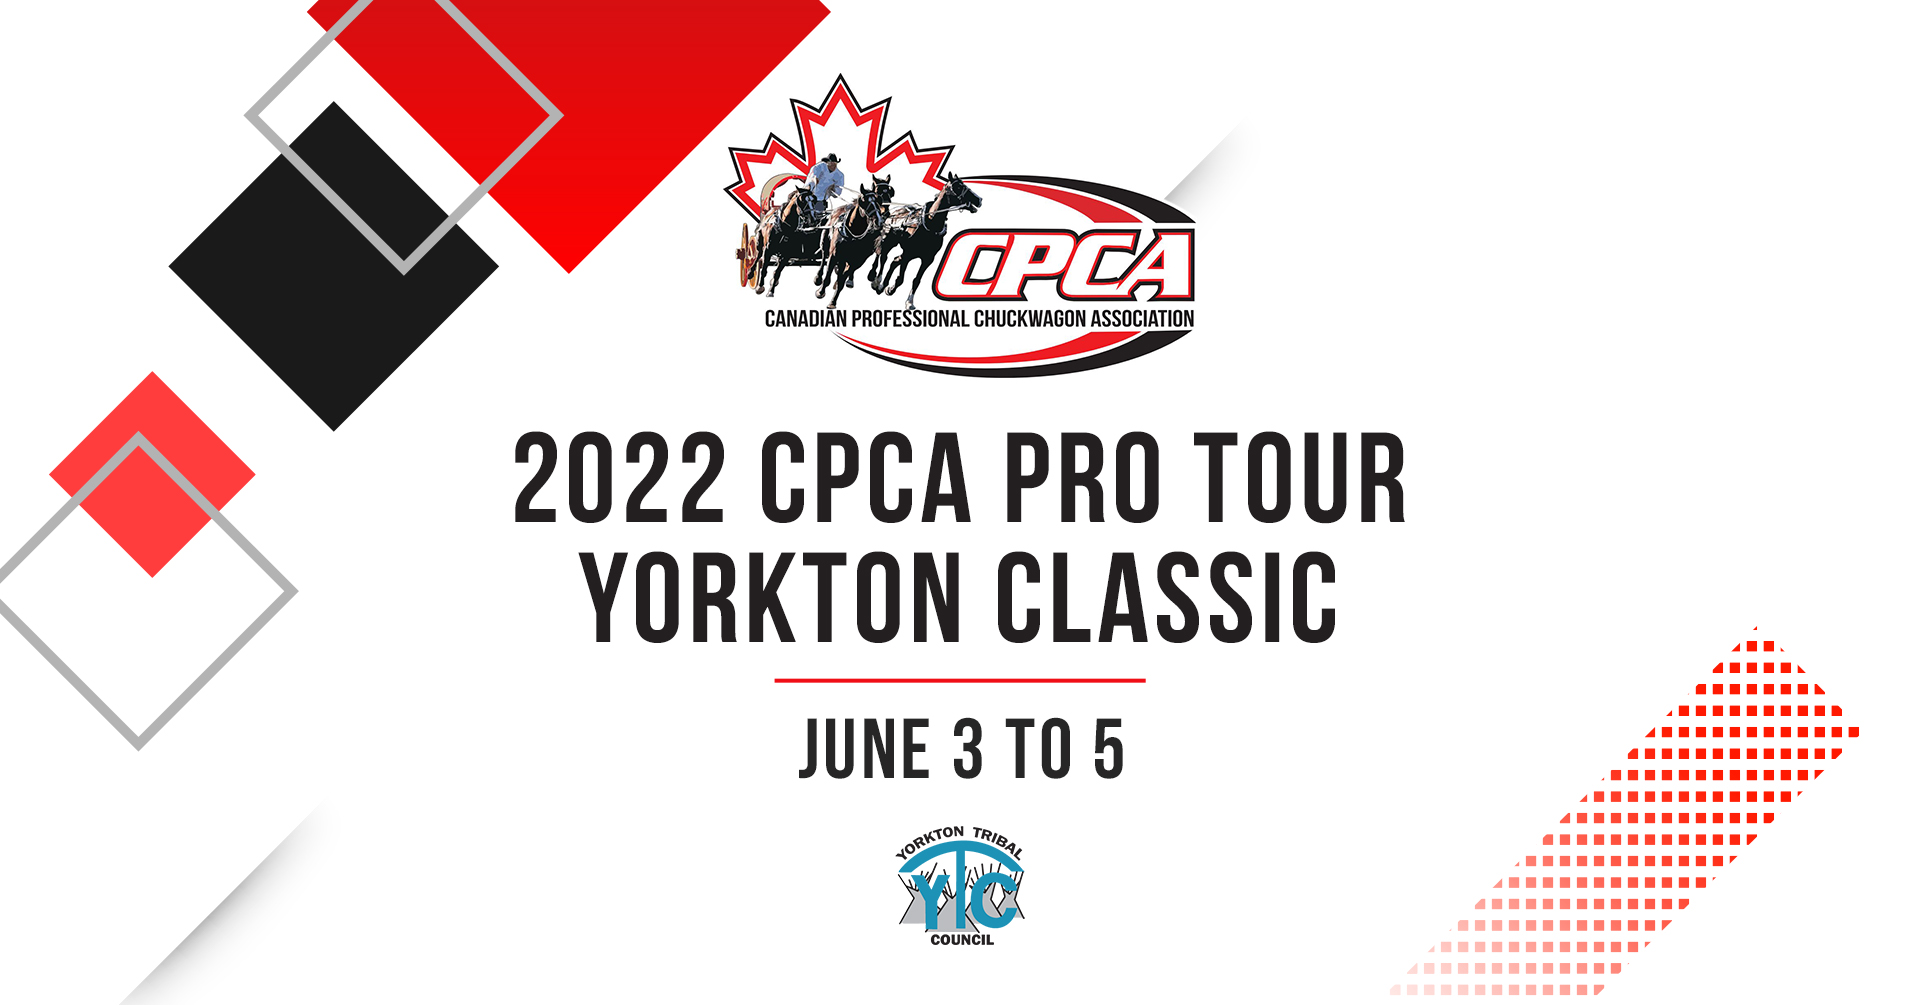 CPCA Pro Tour Yorkton Classic - June 3 to 5